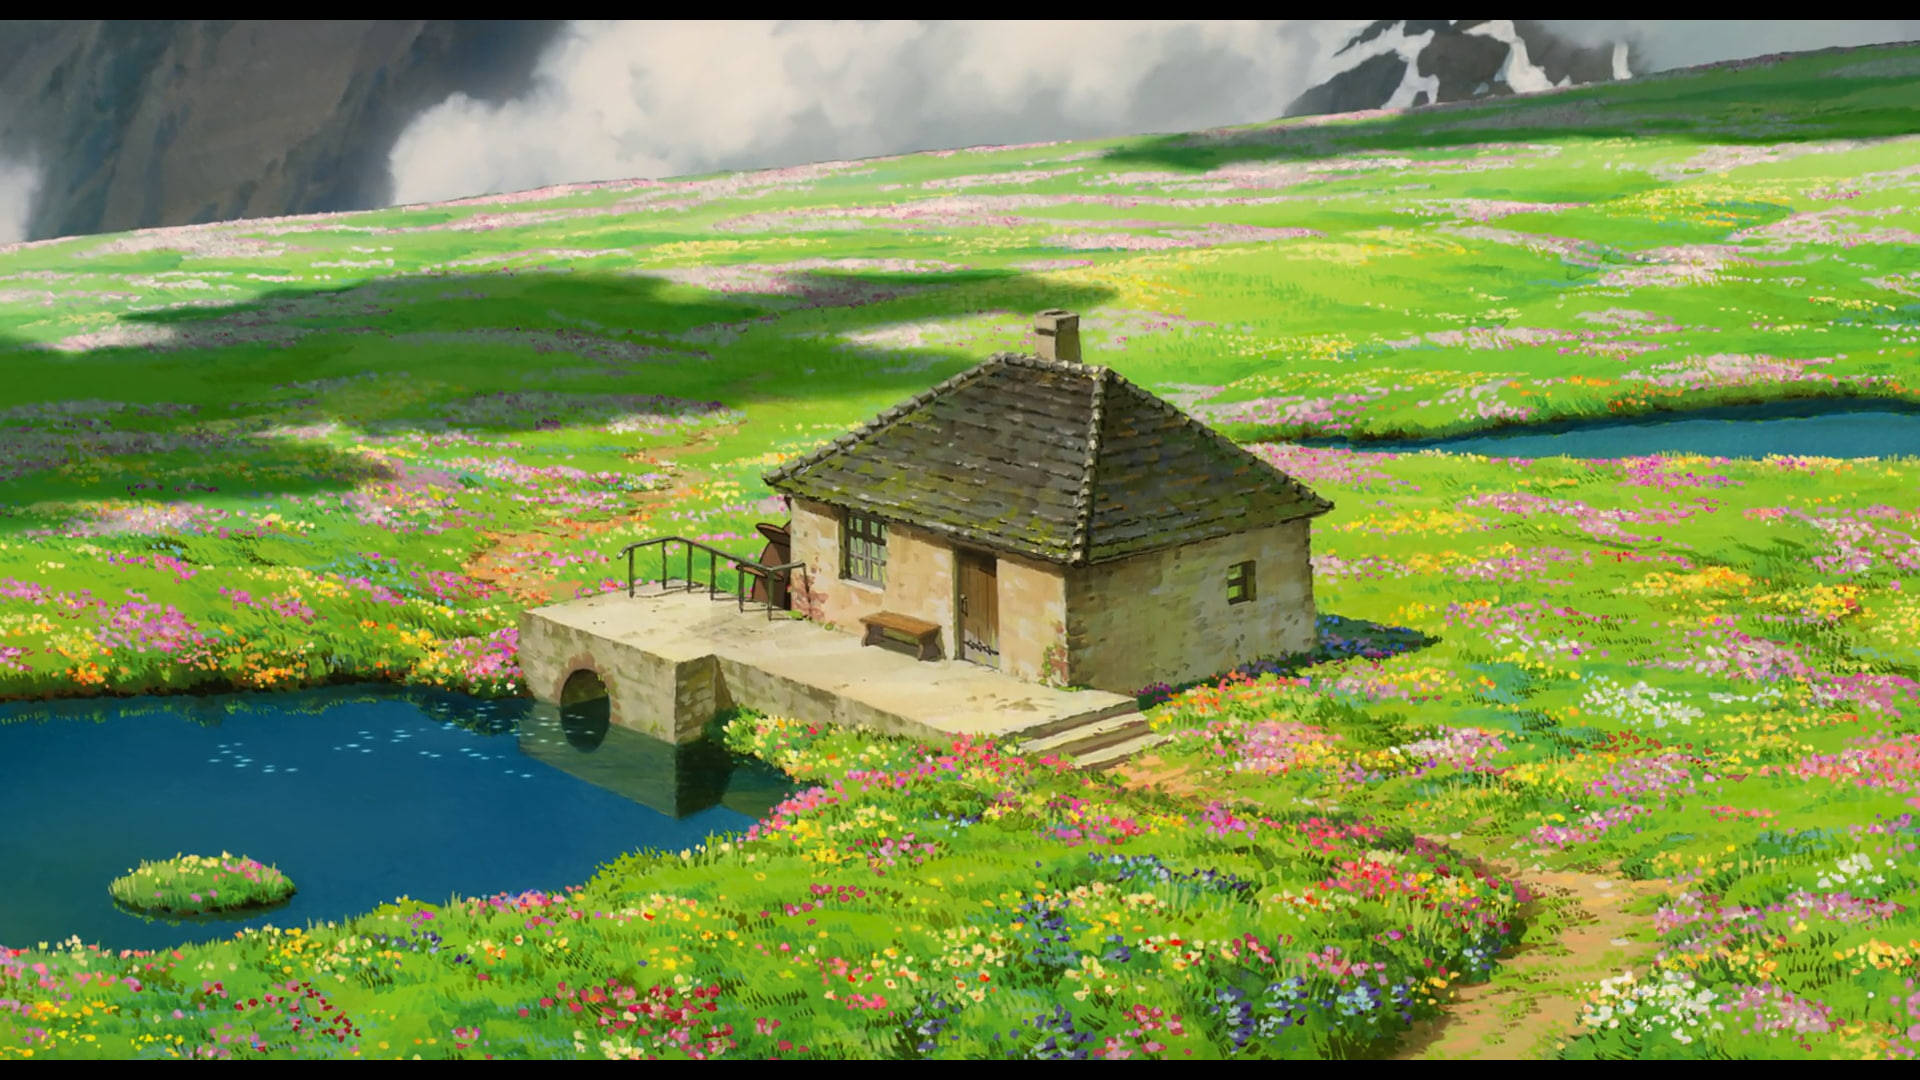 Studio Ghibli Scenery Wallpaper for FREE